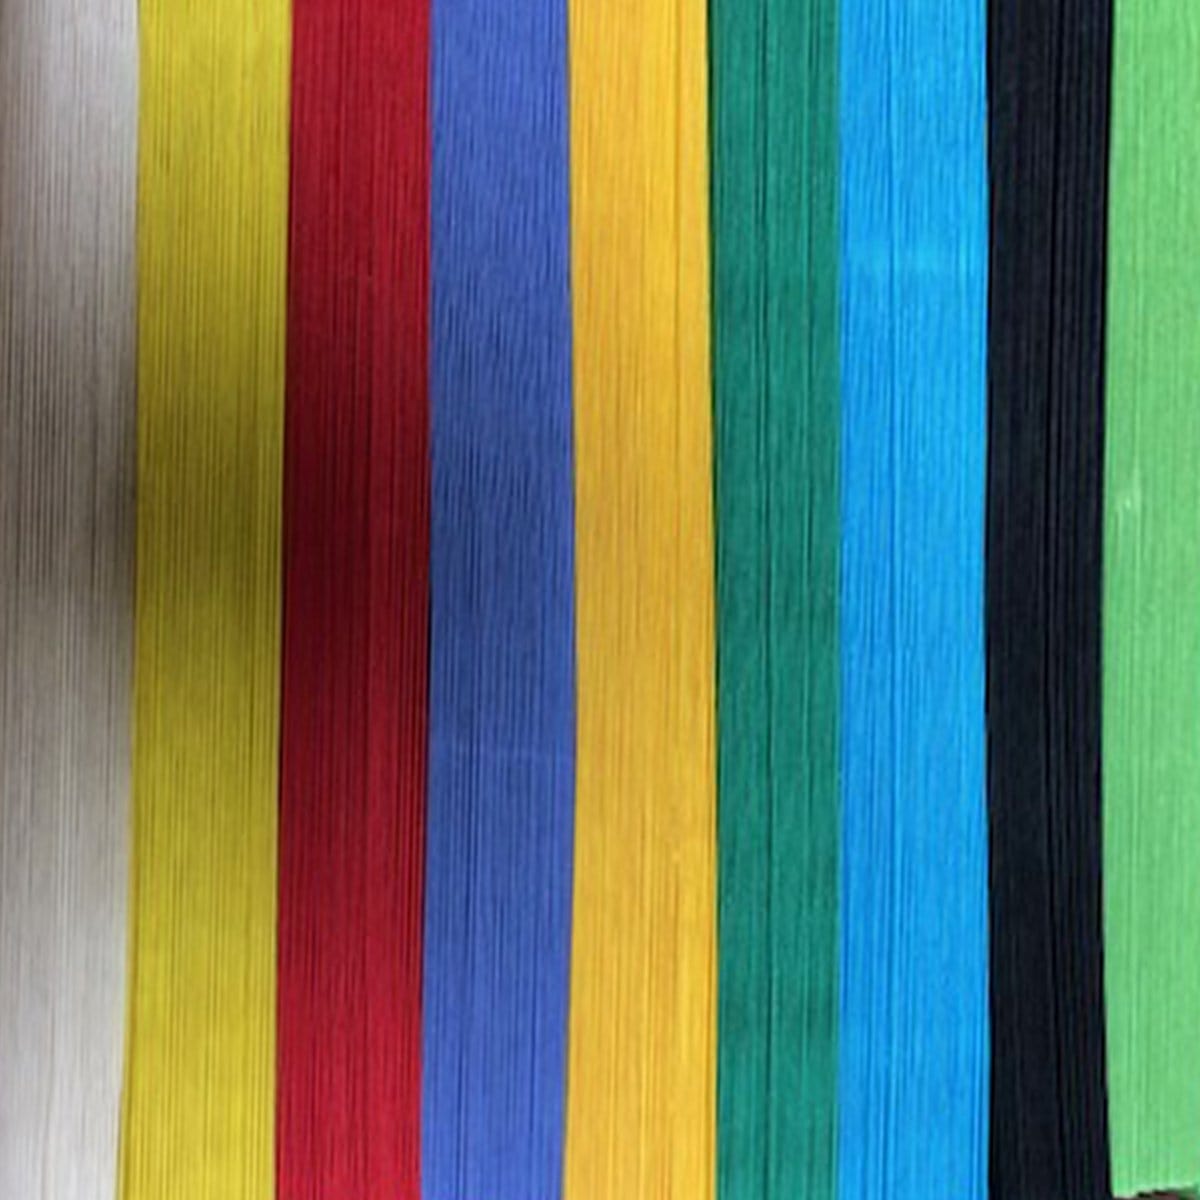 C6 Multi Colour Mixed 120gsm Peel & Seal Envelopes (Box 2) [Qty 250] 114 x 162mm - All Colour Envelopes